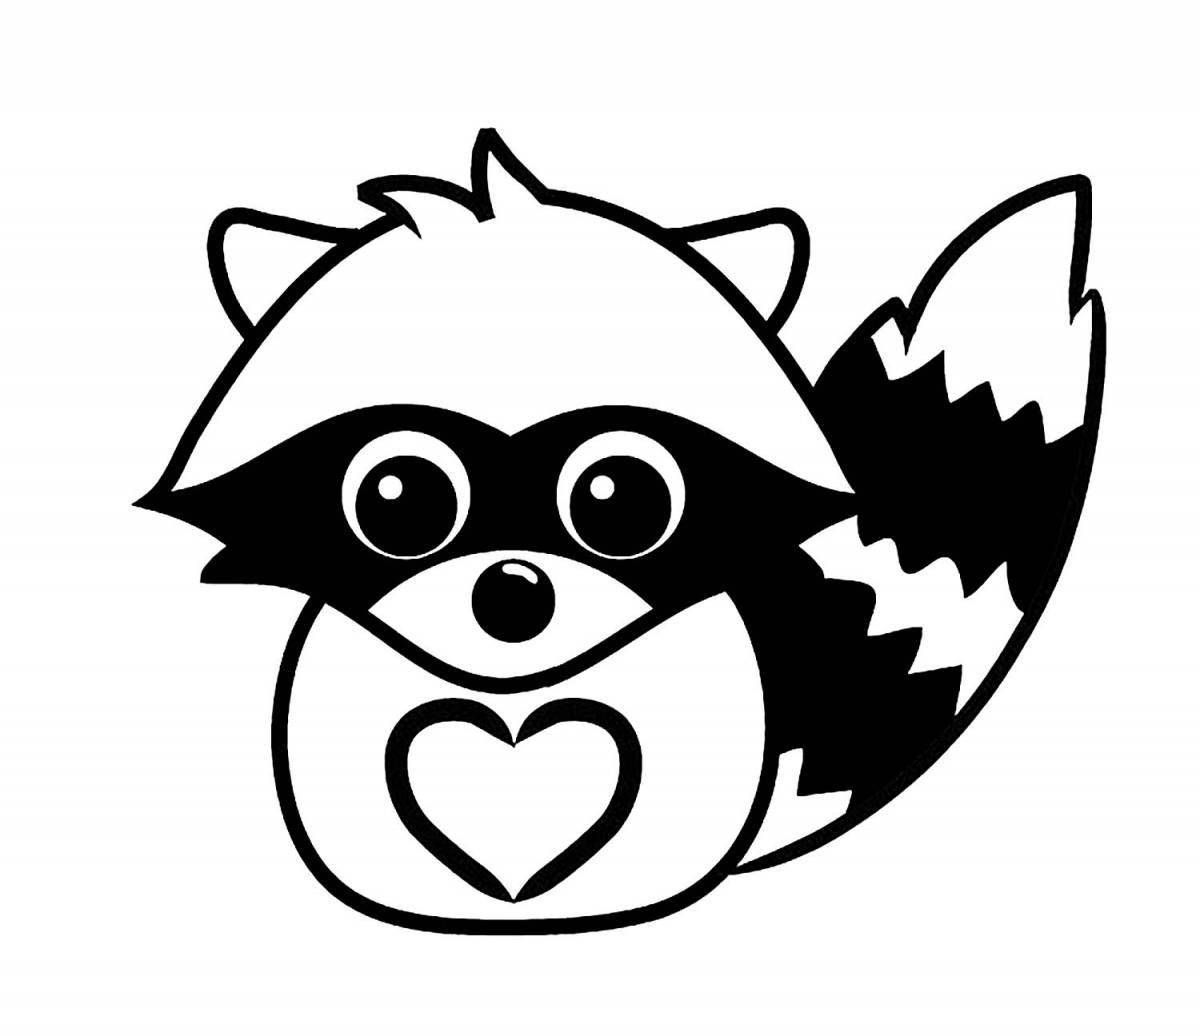 Cute raccoons #8